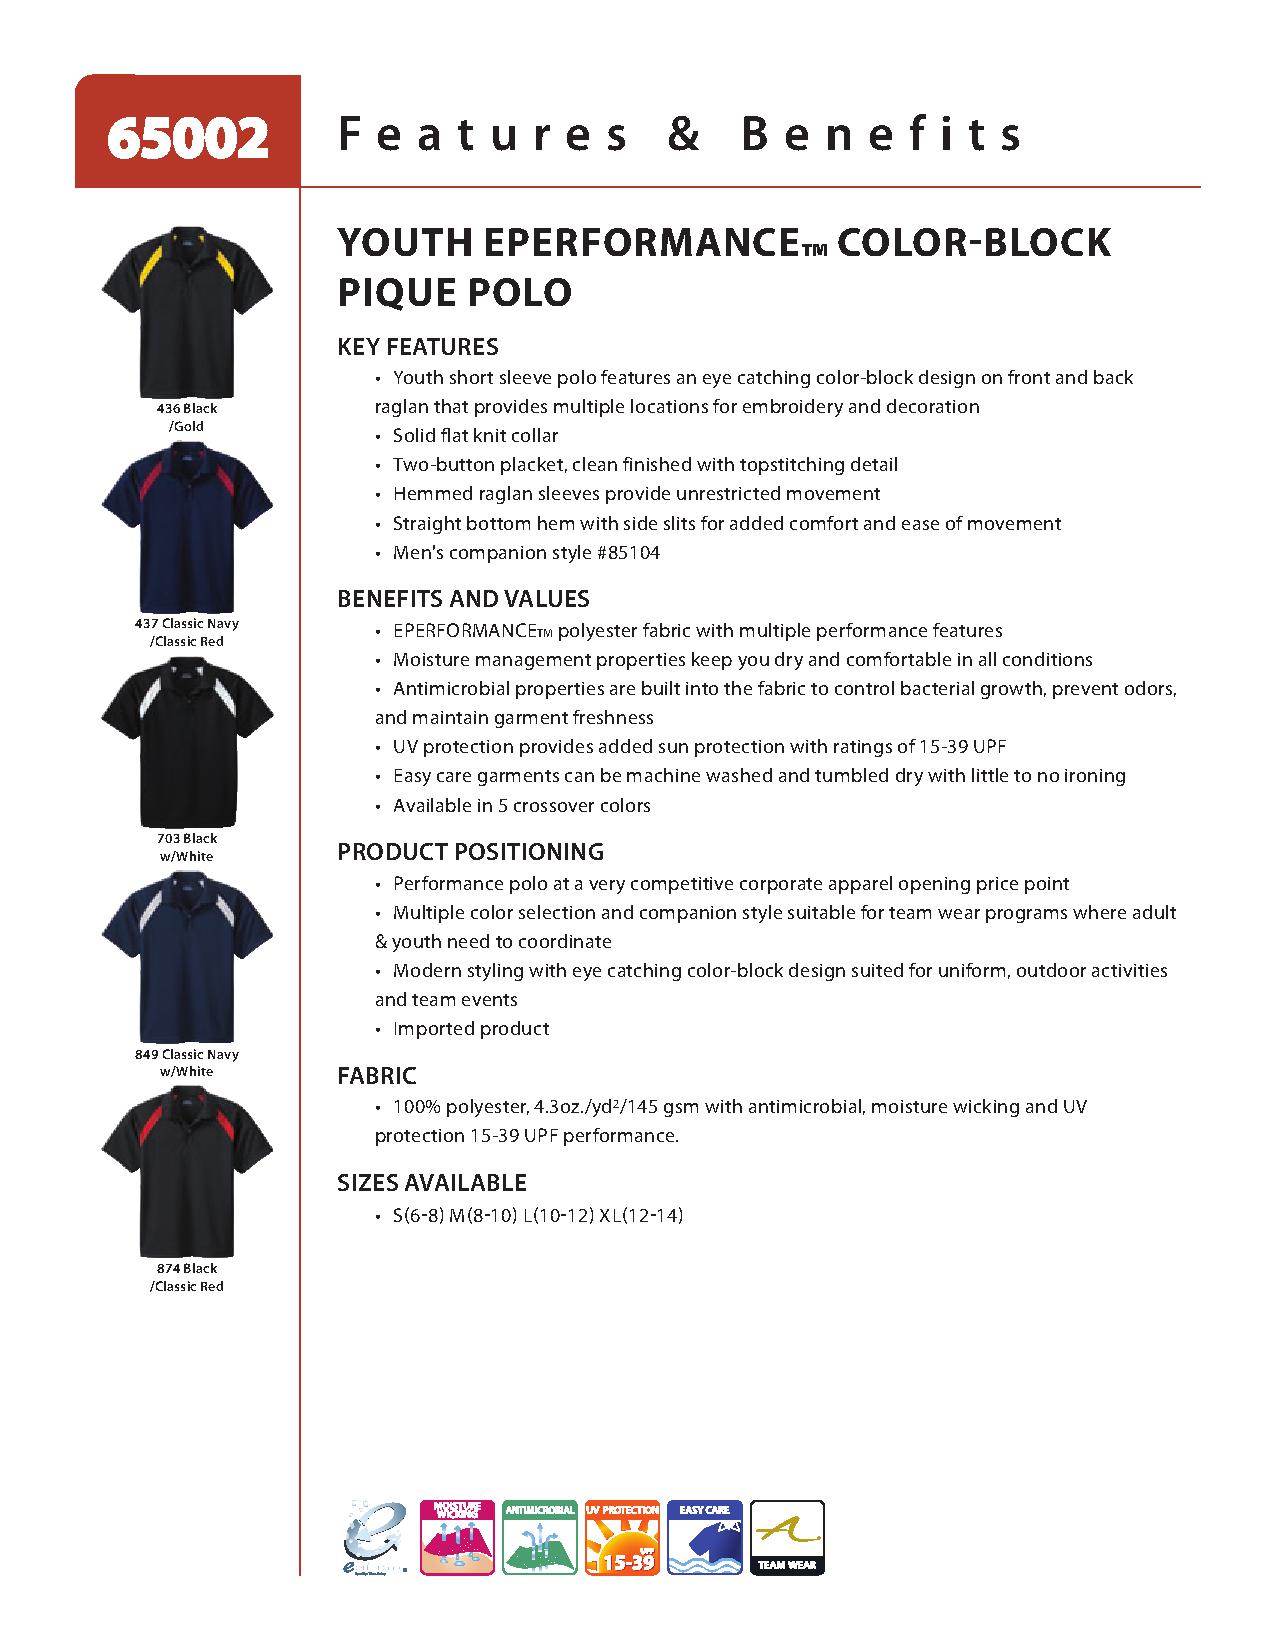 Ash City Pique 65002 - Youth Eperformance Color-Block Pique Polo